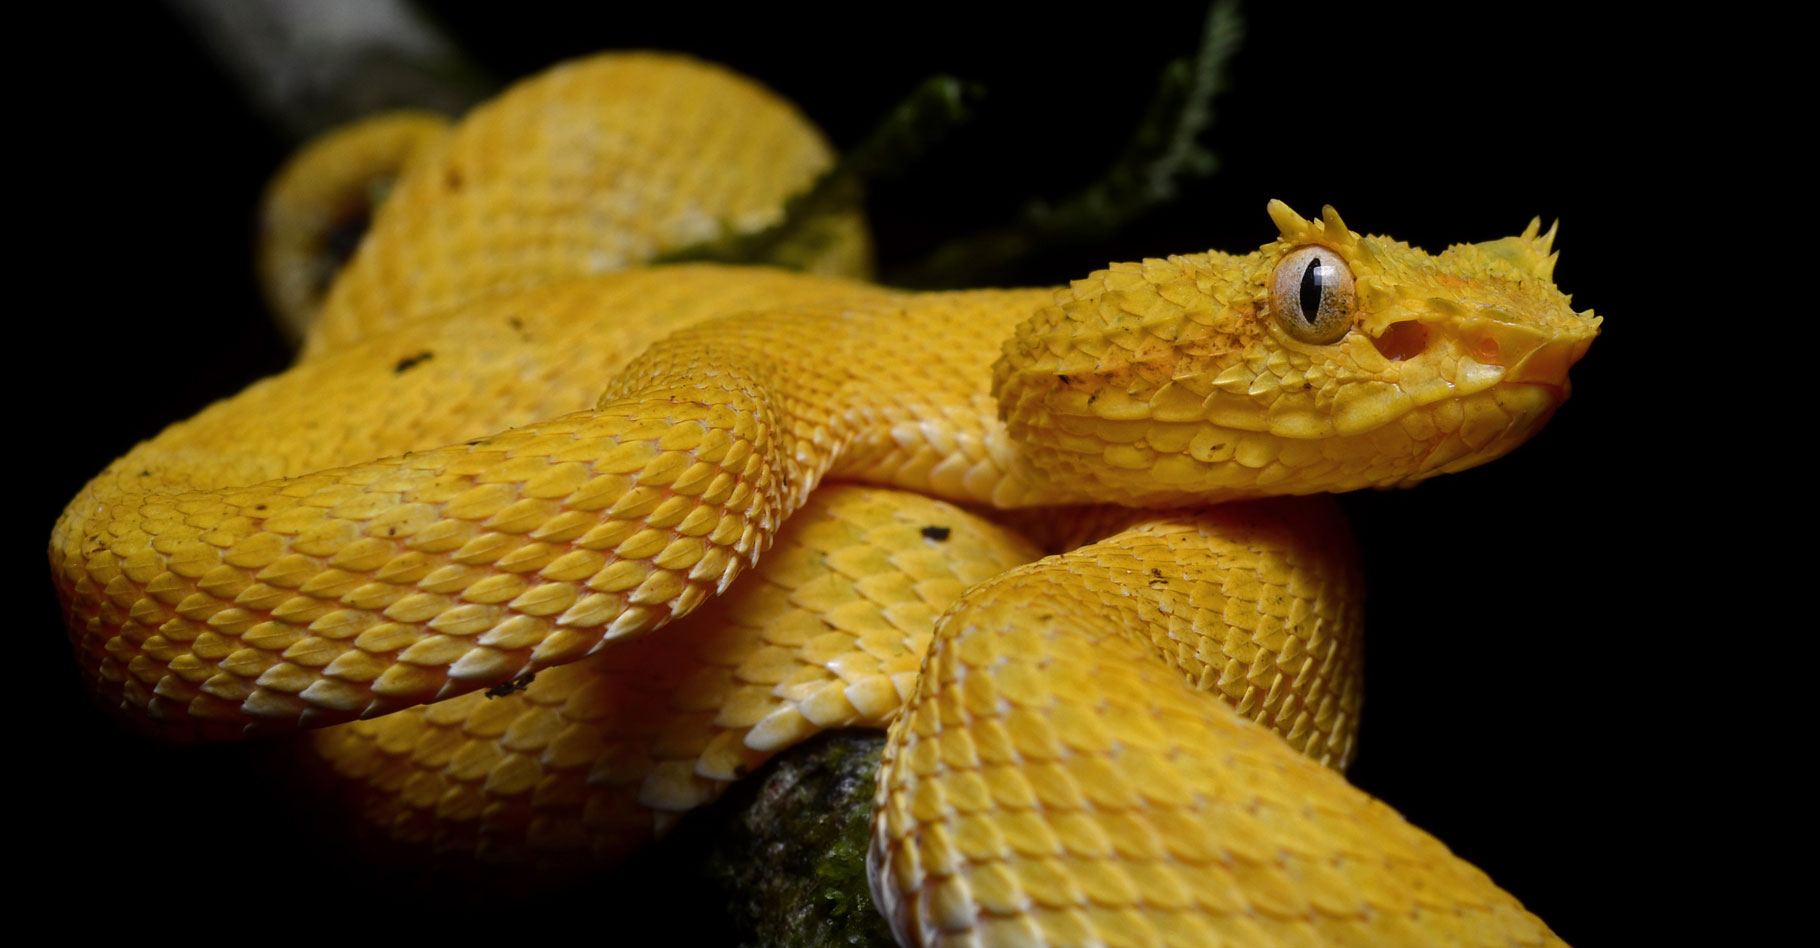 Vipère de Schlegel&nbsp;(Bothriechis schlegelii) Costa Rica.&nbsp;© Geoff Gallice, Wikimedia commons, CC by 2.0